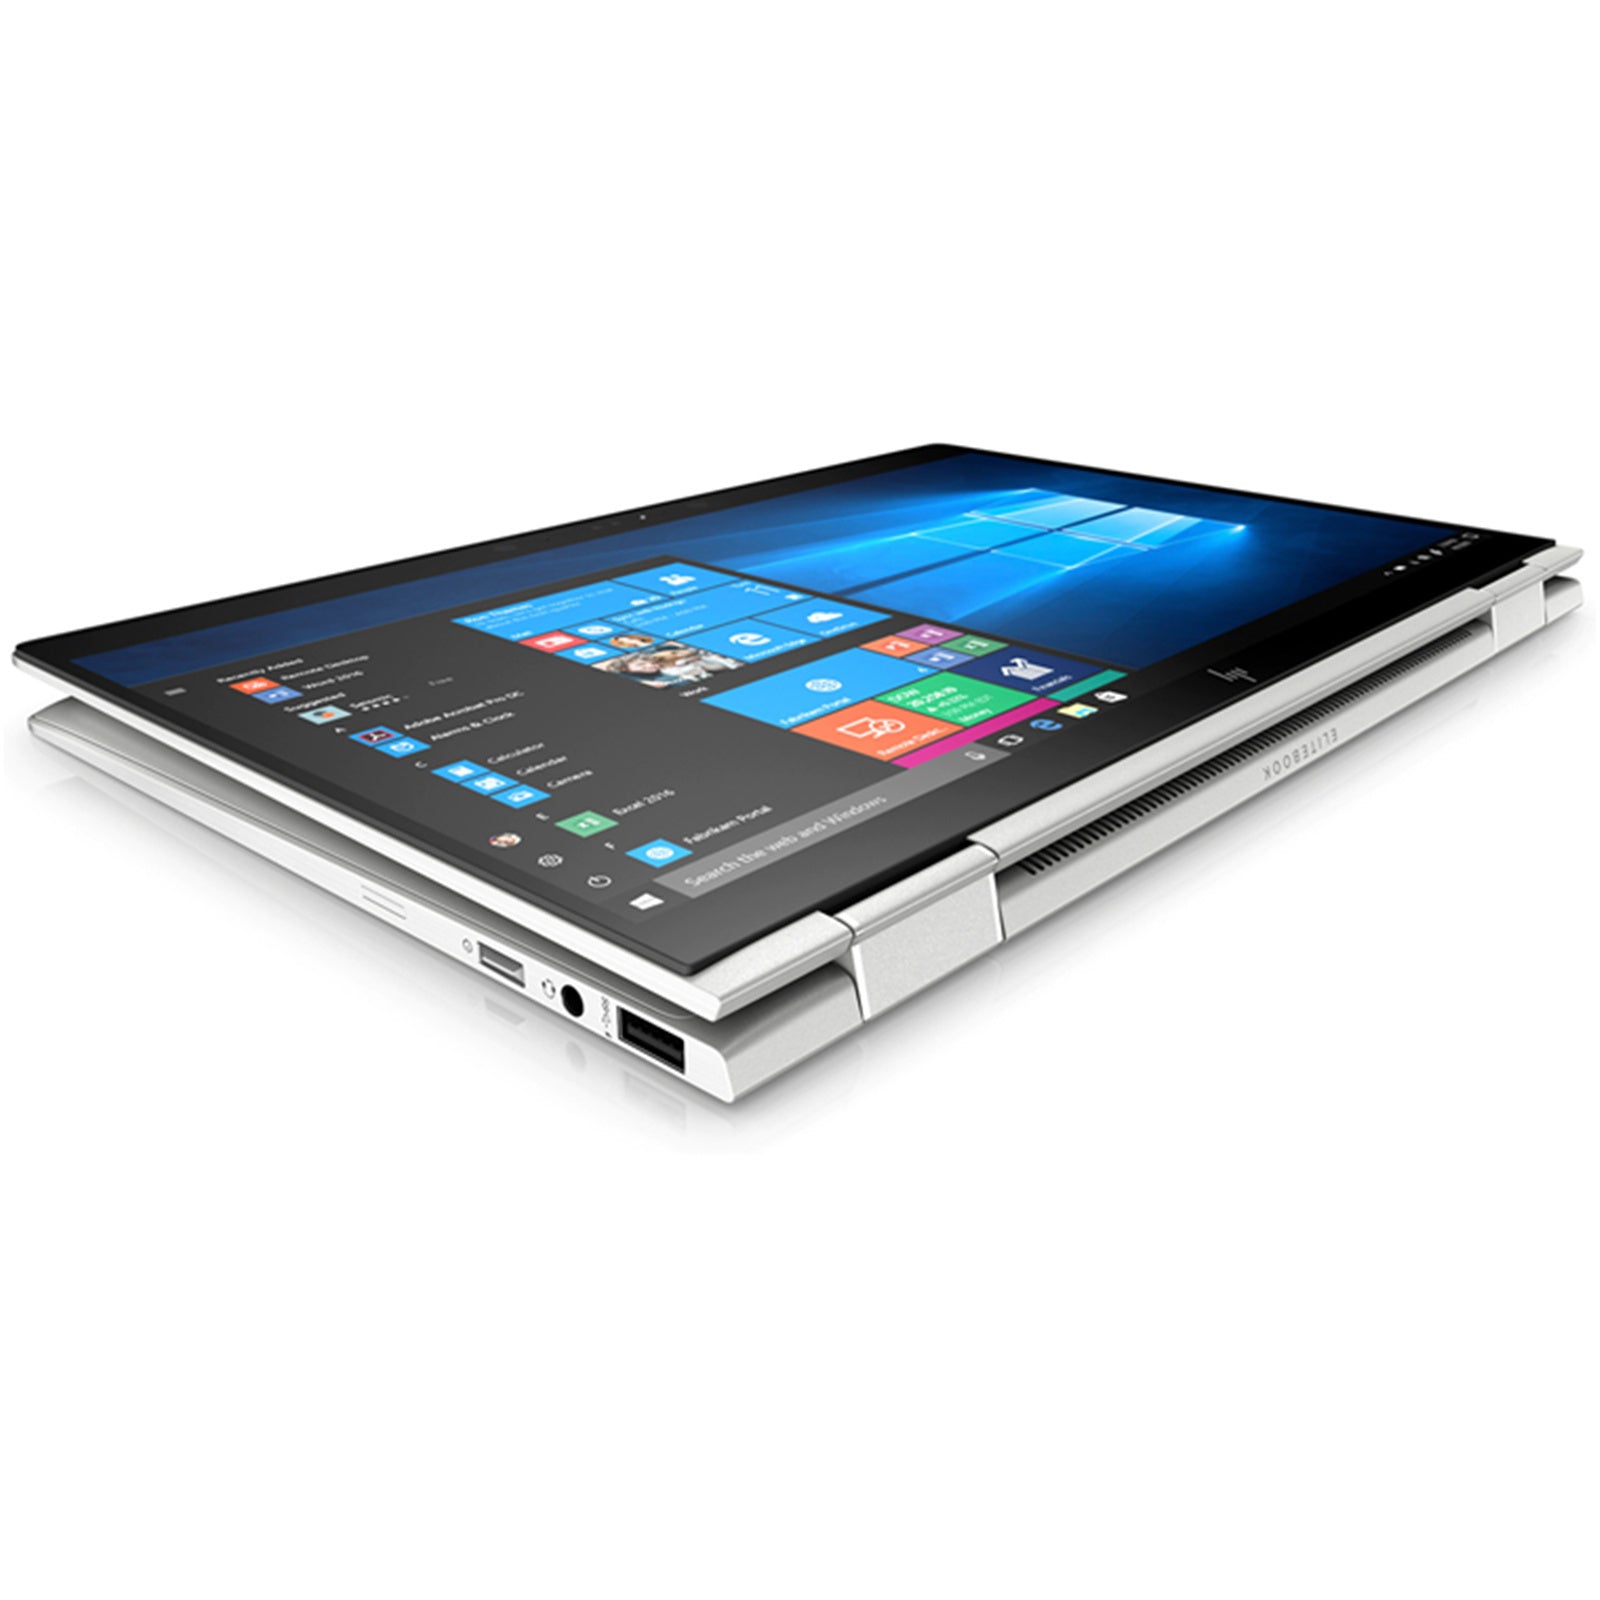 HP X360 440 G1 Touchscreen (Brand new Battery), i5-8250u, 8GB, 256GB SSD, Windows 11 - Refurbished Good Condition